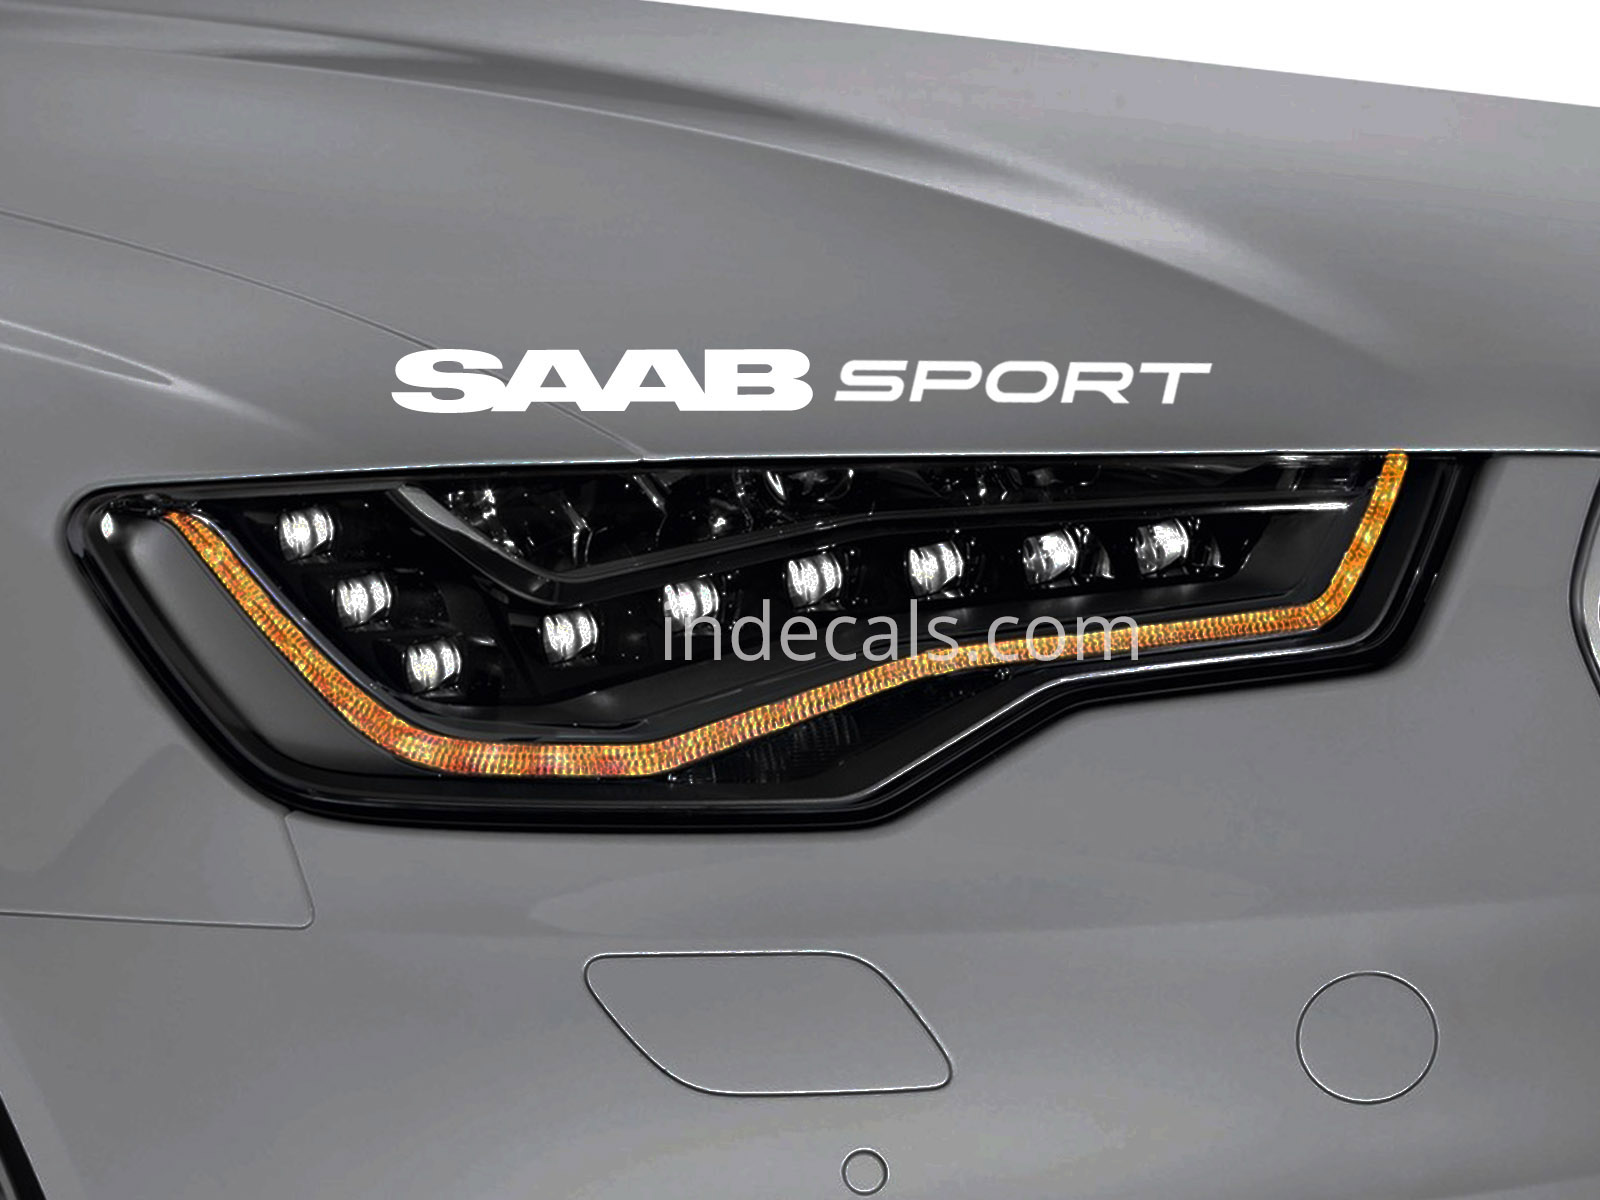 1 x Saab Sport Sticker for Eyebrow - White